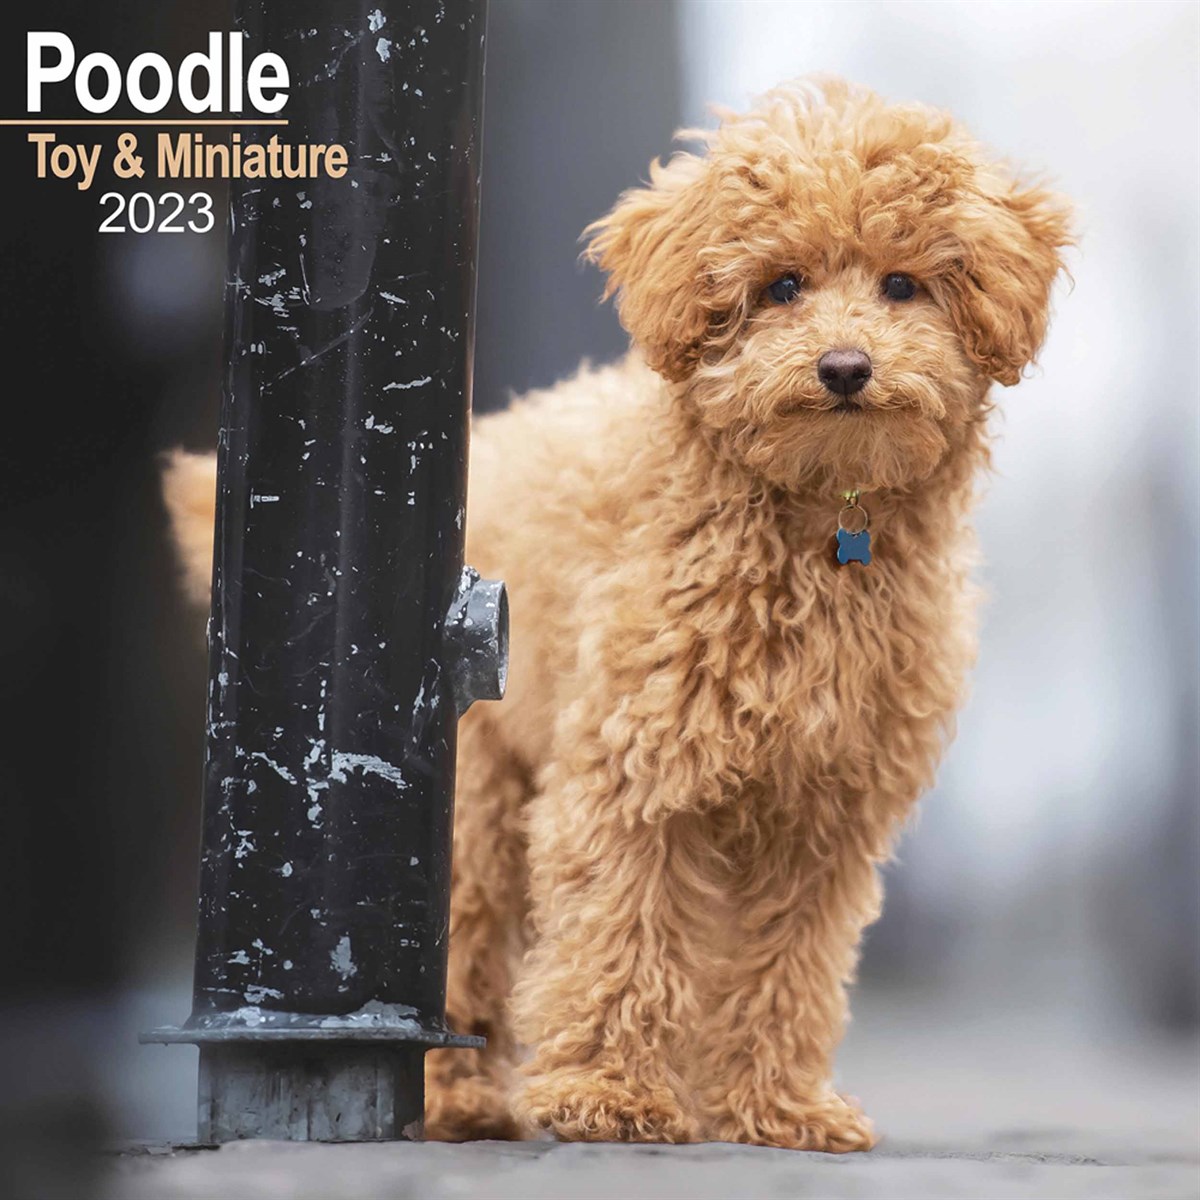 Toy & Miniature Poodle 2023 Calendars